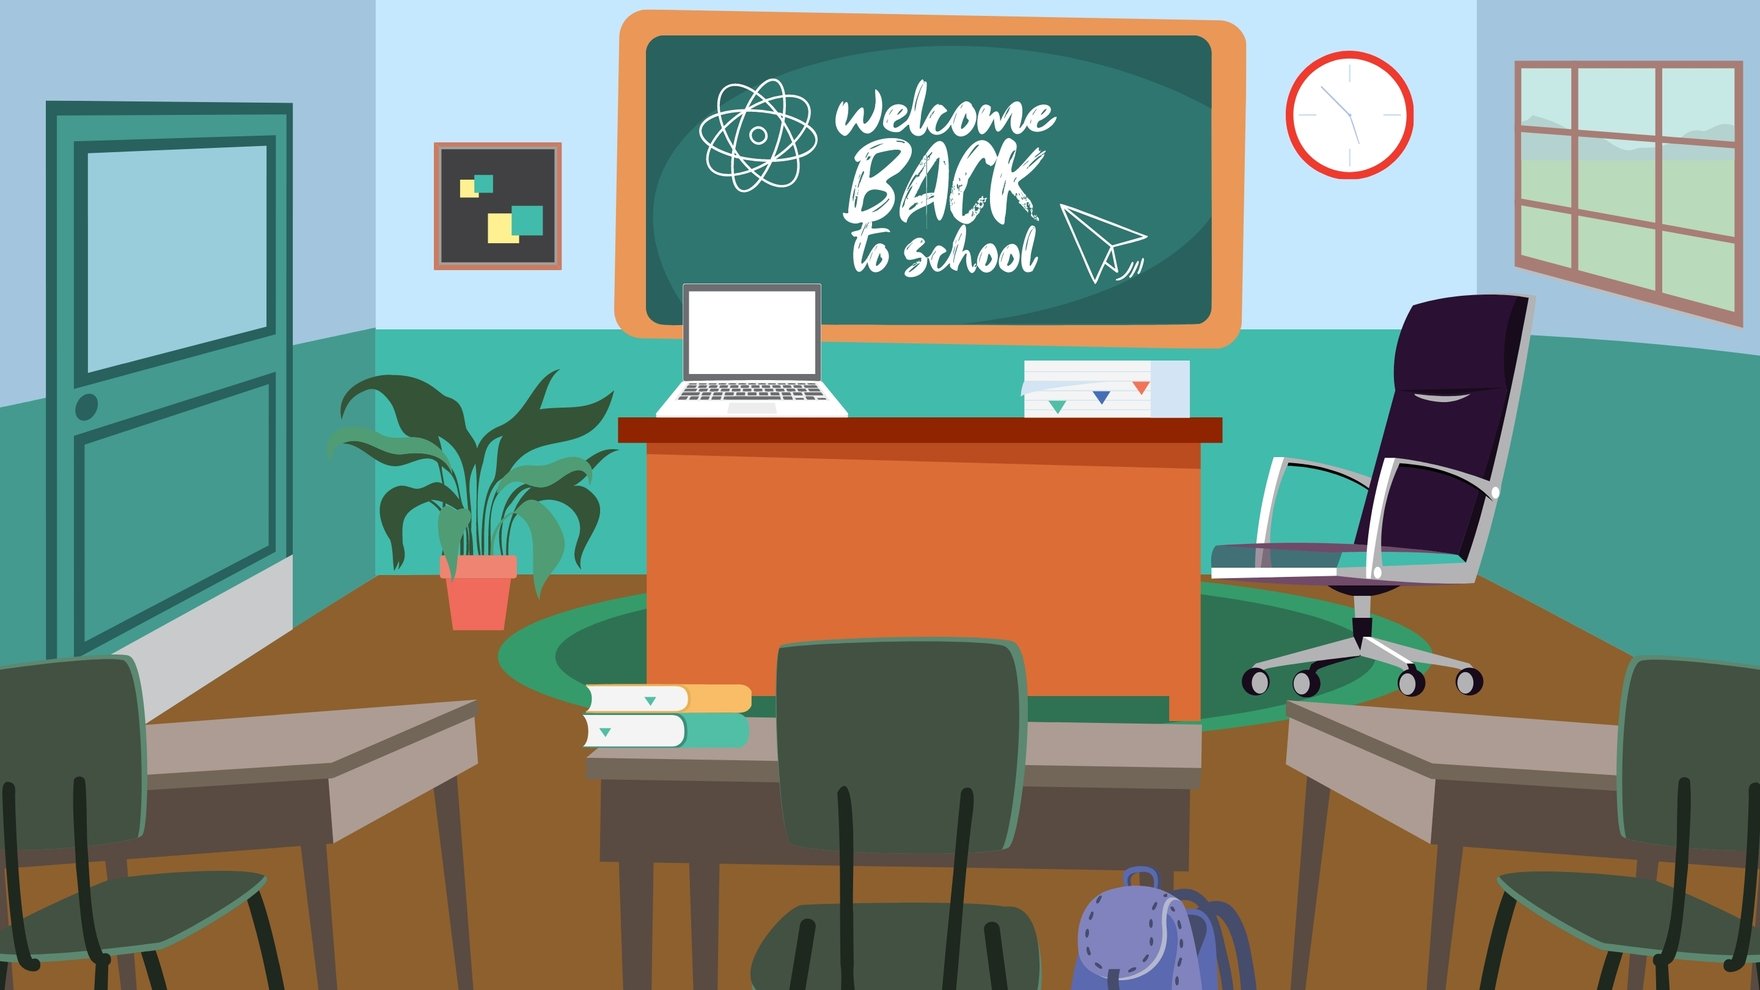 Free Classroom 3d Background in Illustrator, EPS, SVG, JPG, PNG